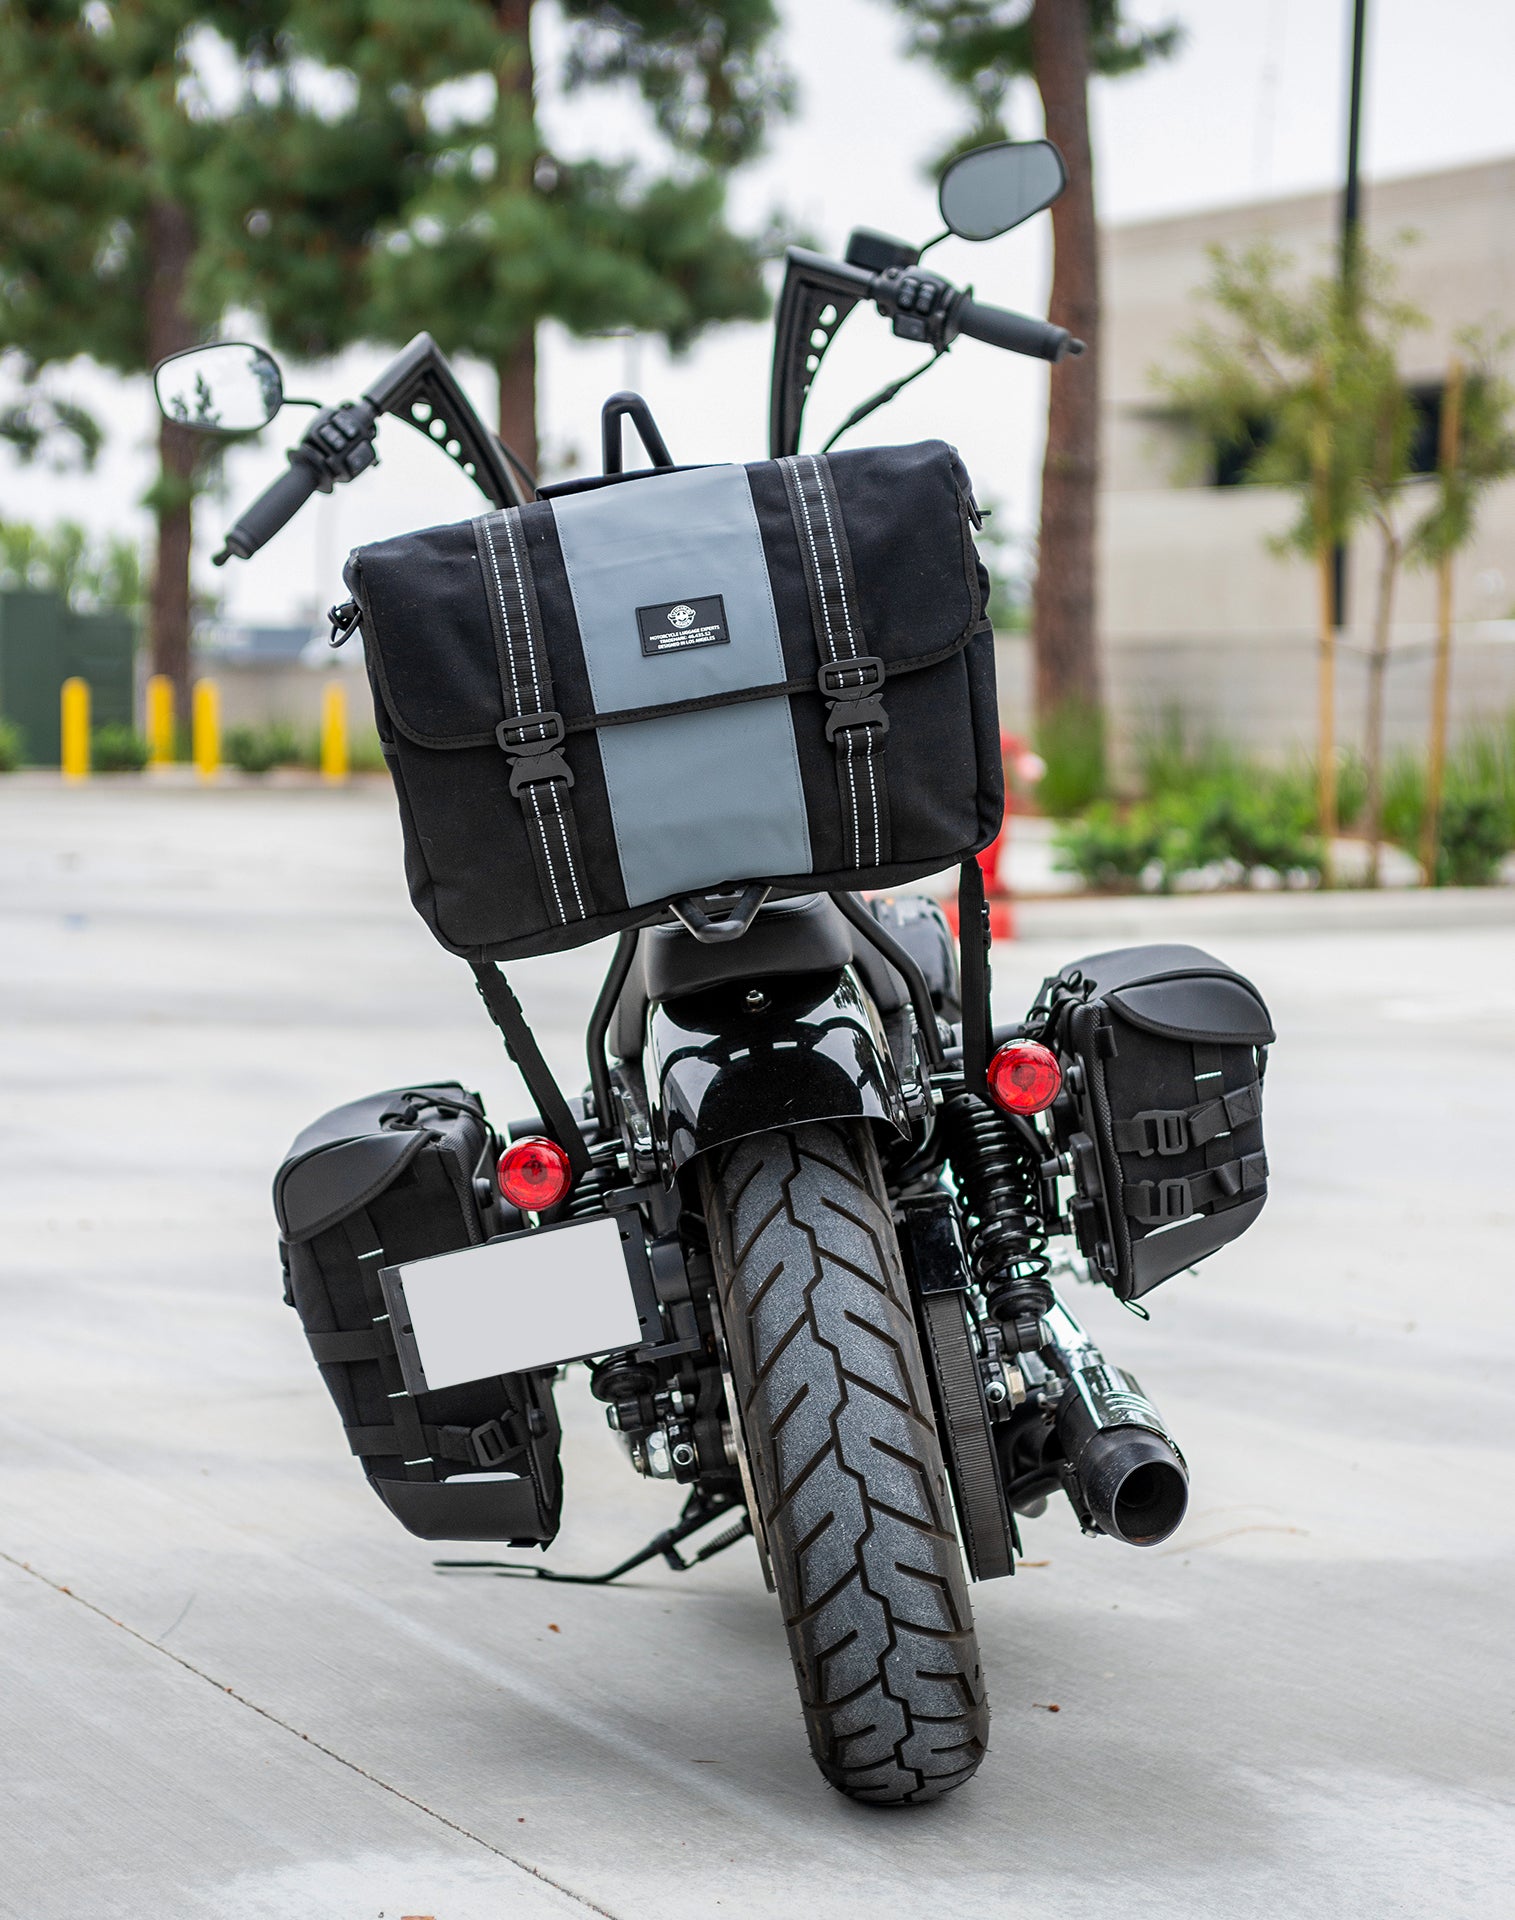 23L - Duo-tone Medium Yamaha Motorcycle Messenger Bag Gray/Black